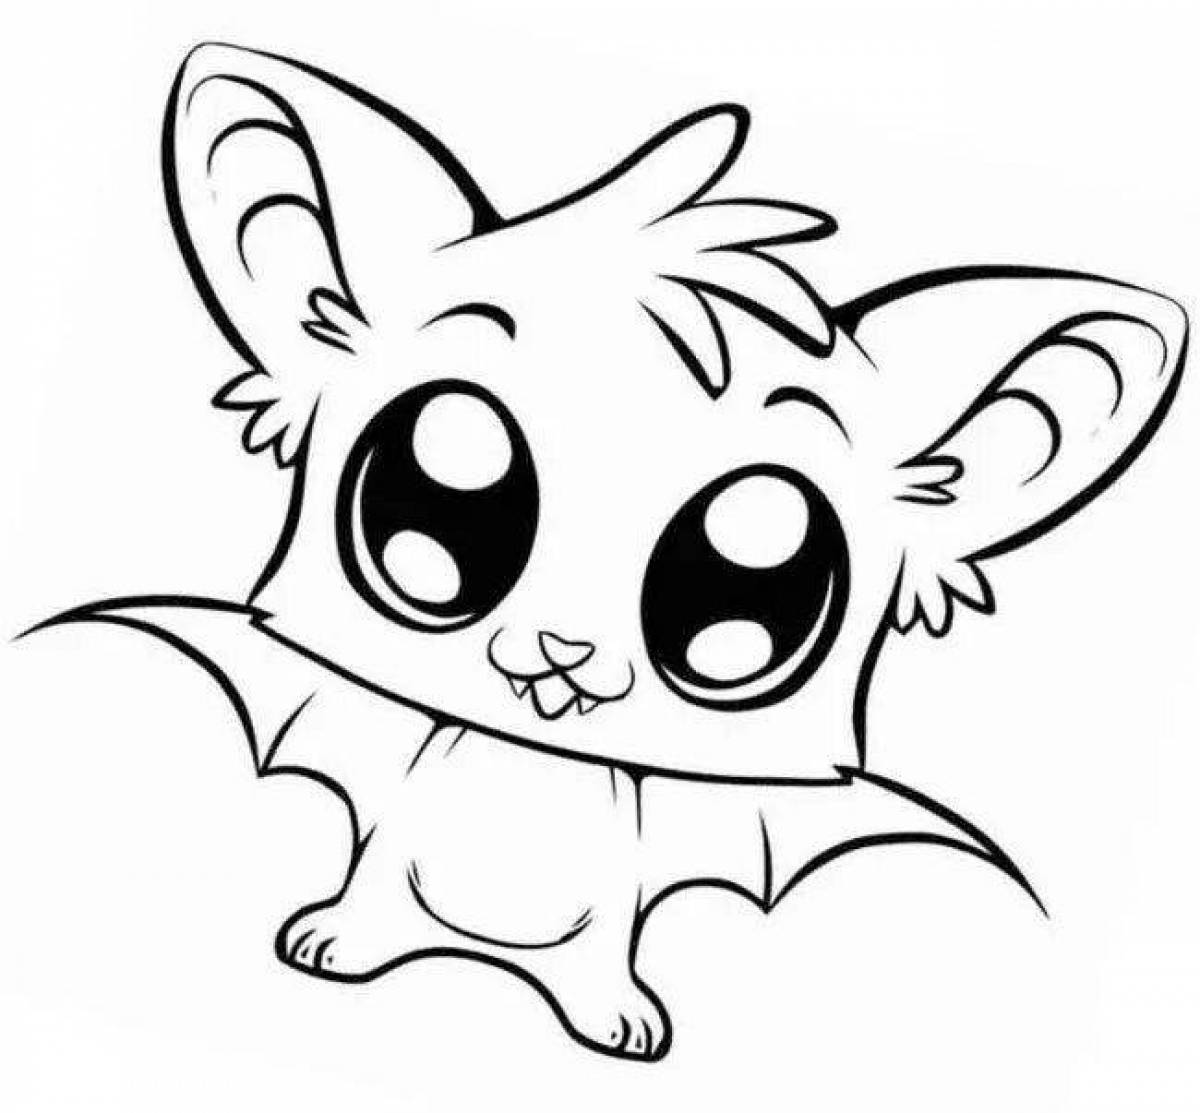 Cute bat coloring book